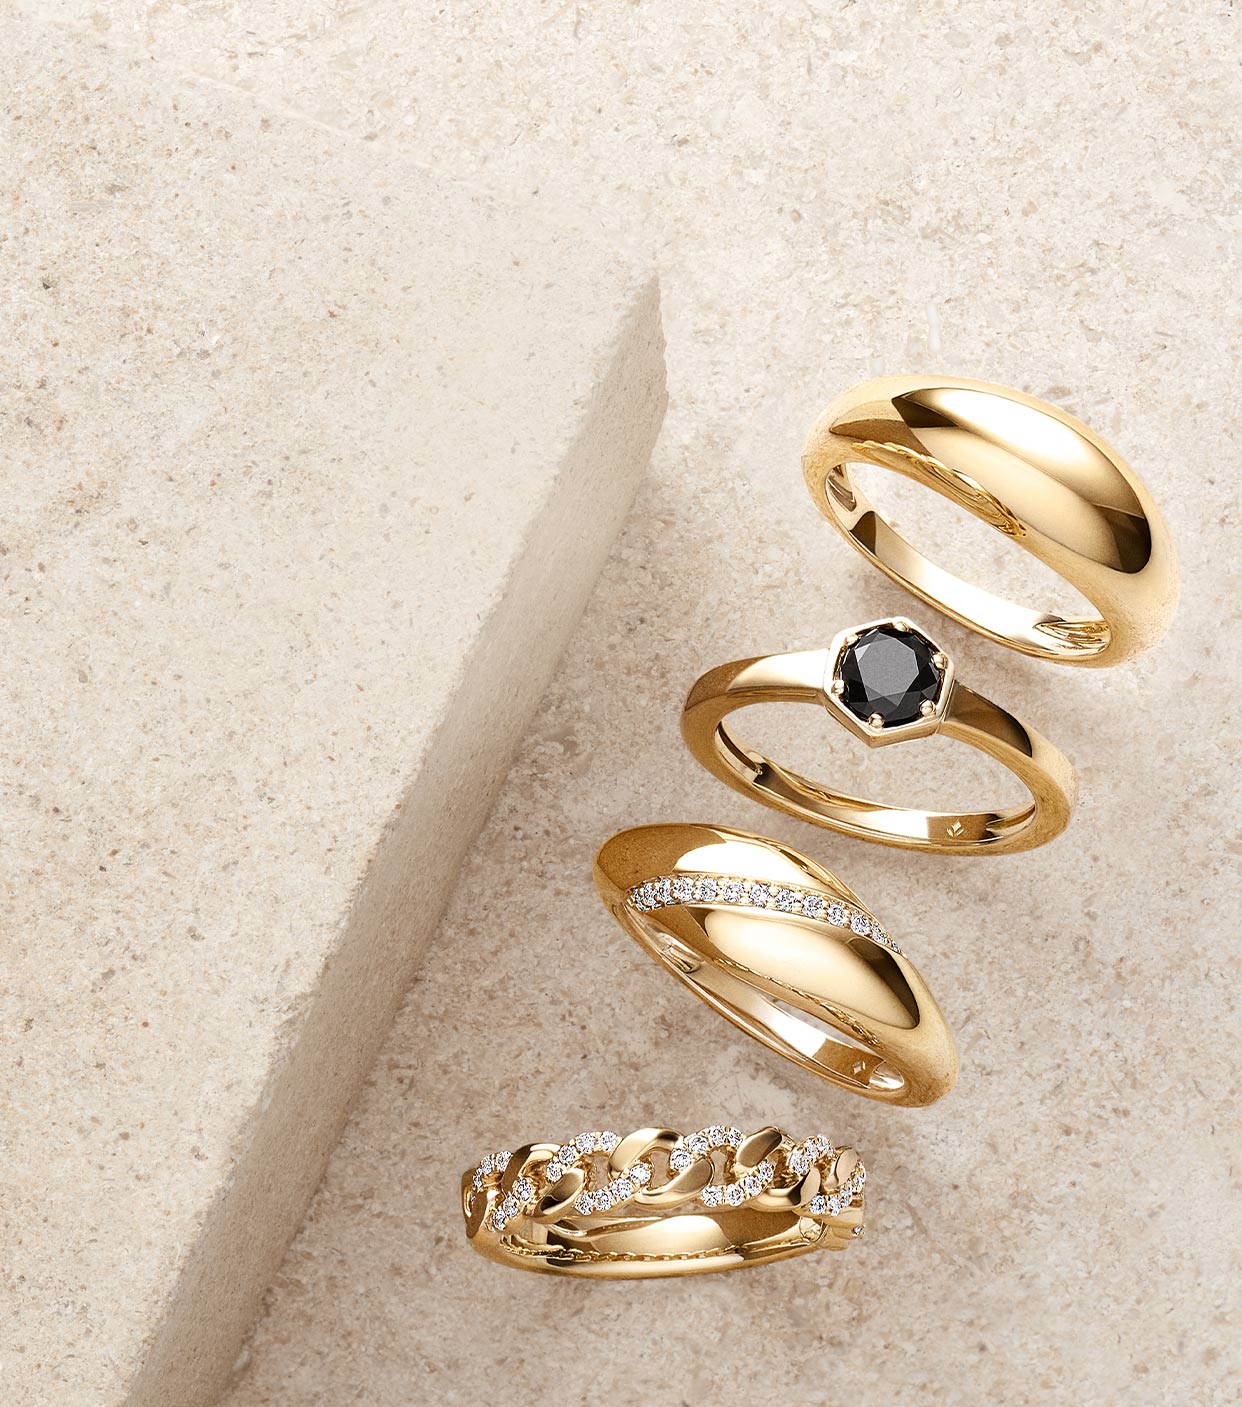 Mixed metal diamond and gemstone fashion rings.